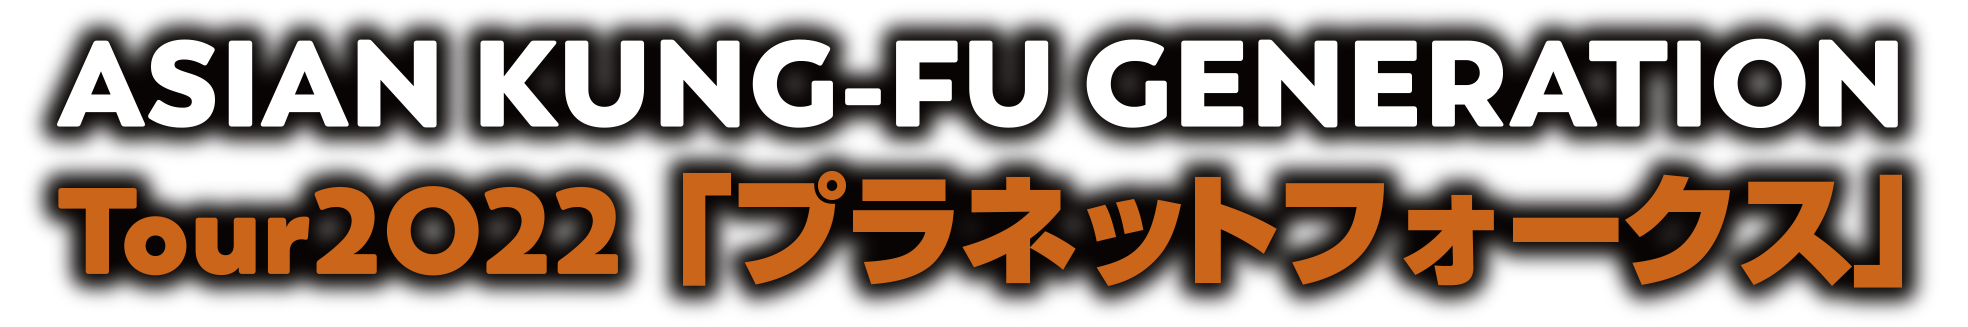 ASIAN KUNG-FU GENERATION Tour 2022 “プラネットフォークス”